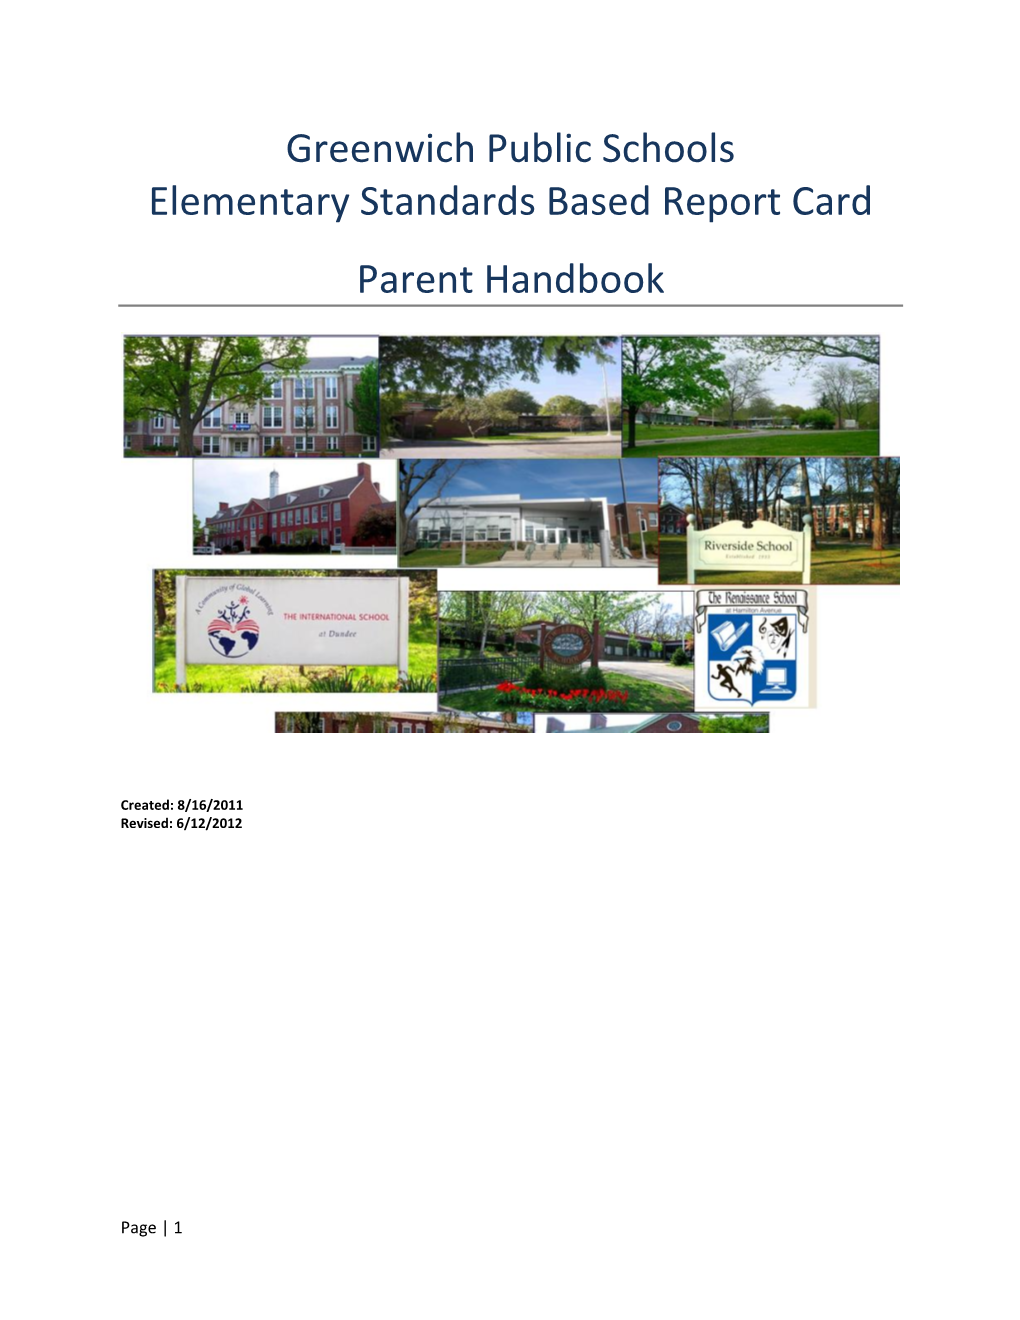 Greenwich Public Schools Elementary Standards Based Report Card Parent Handbook